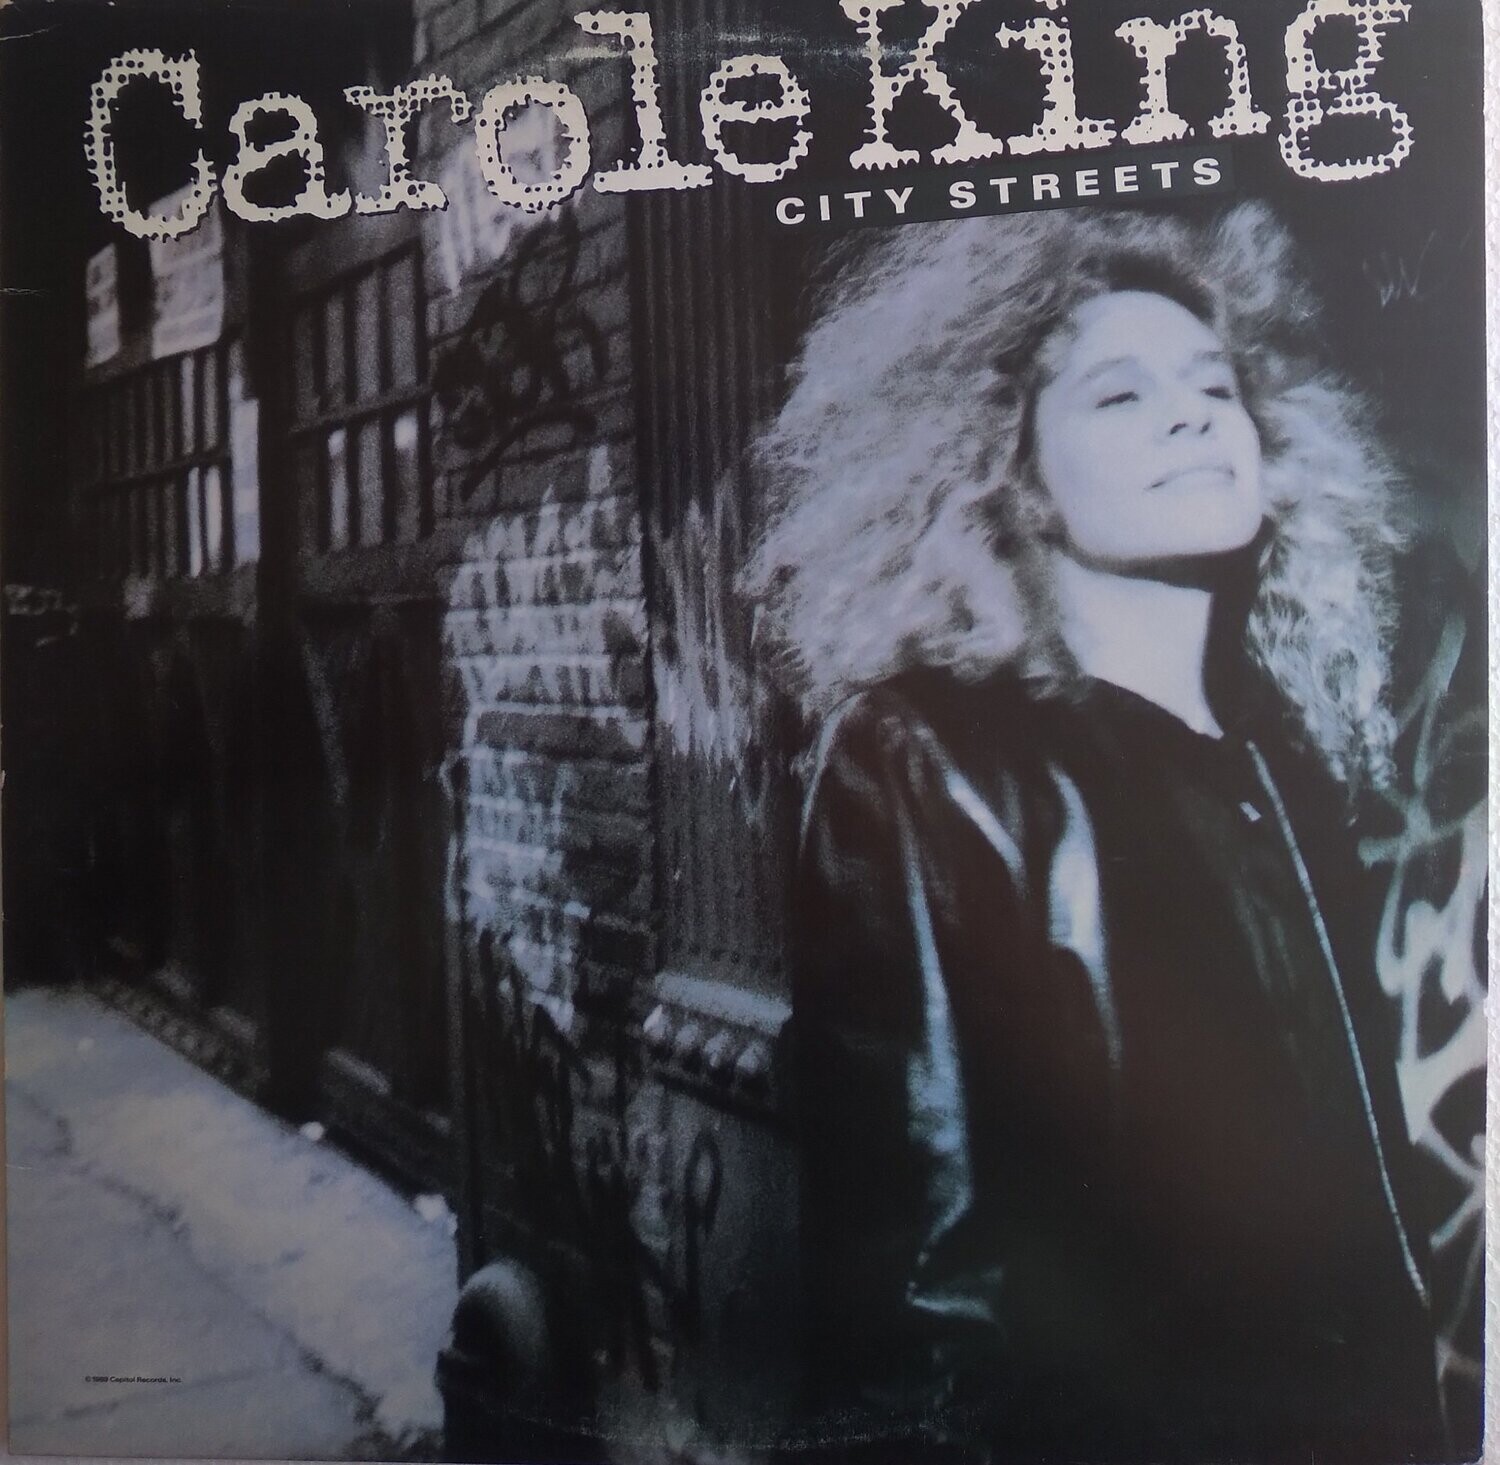 Carole King - City streets (1989)